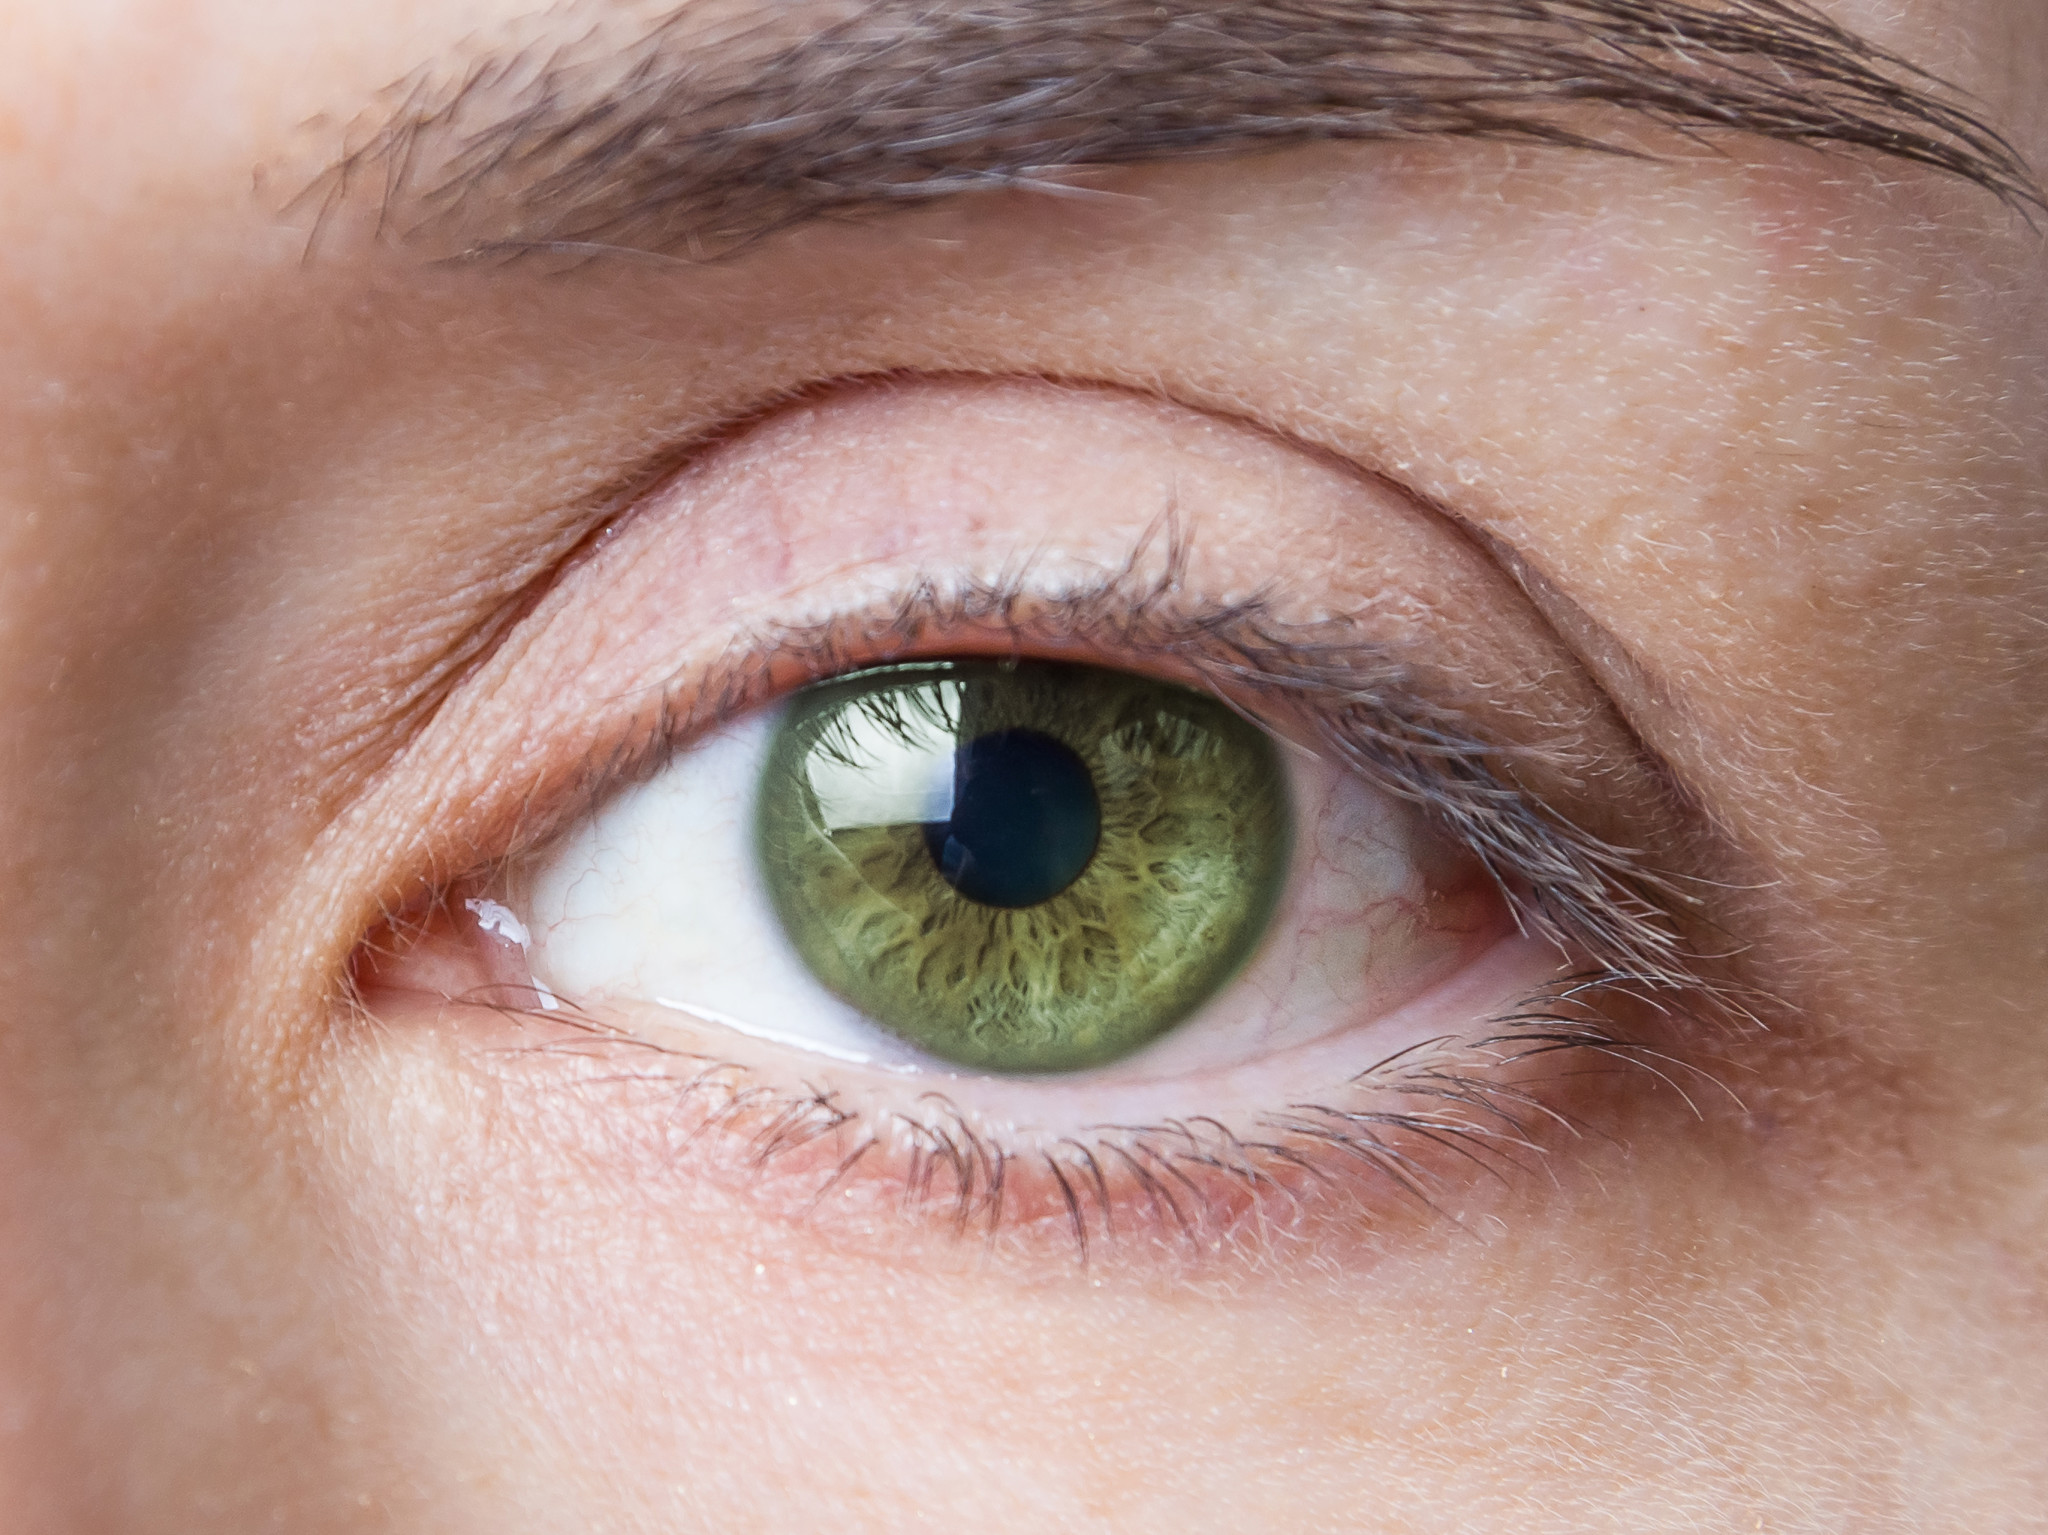 New listing for eye treatment | AJP